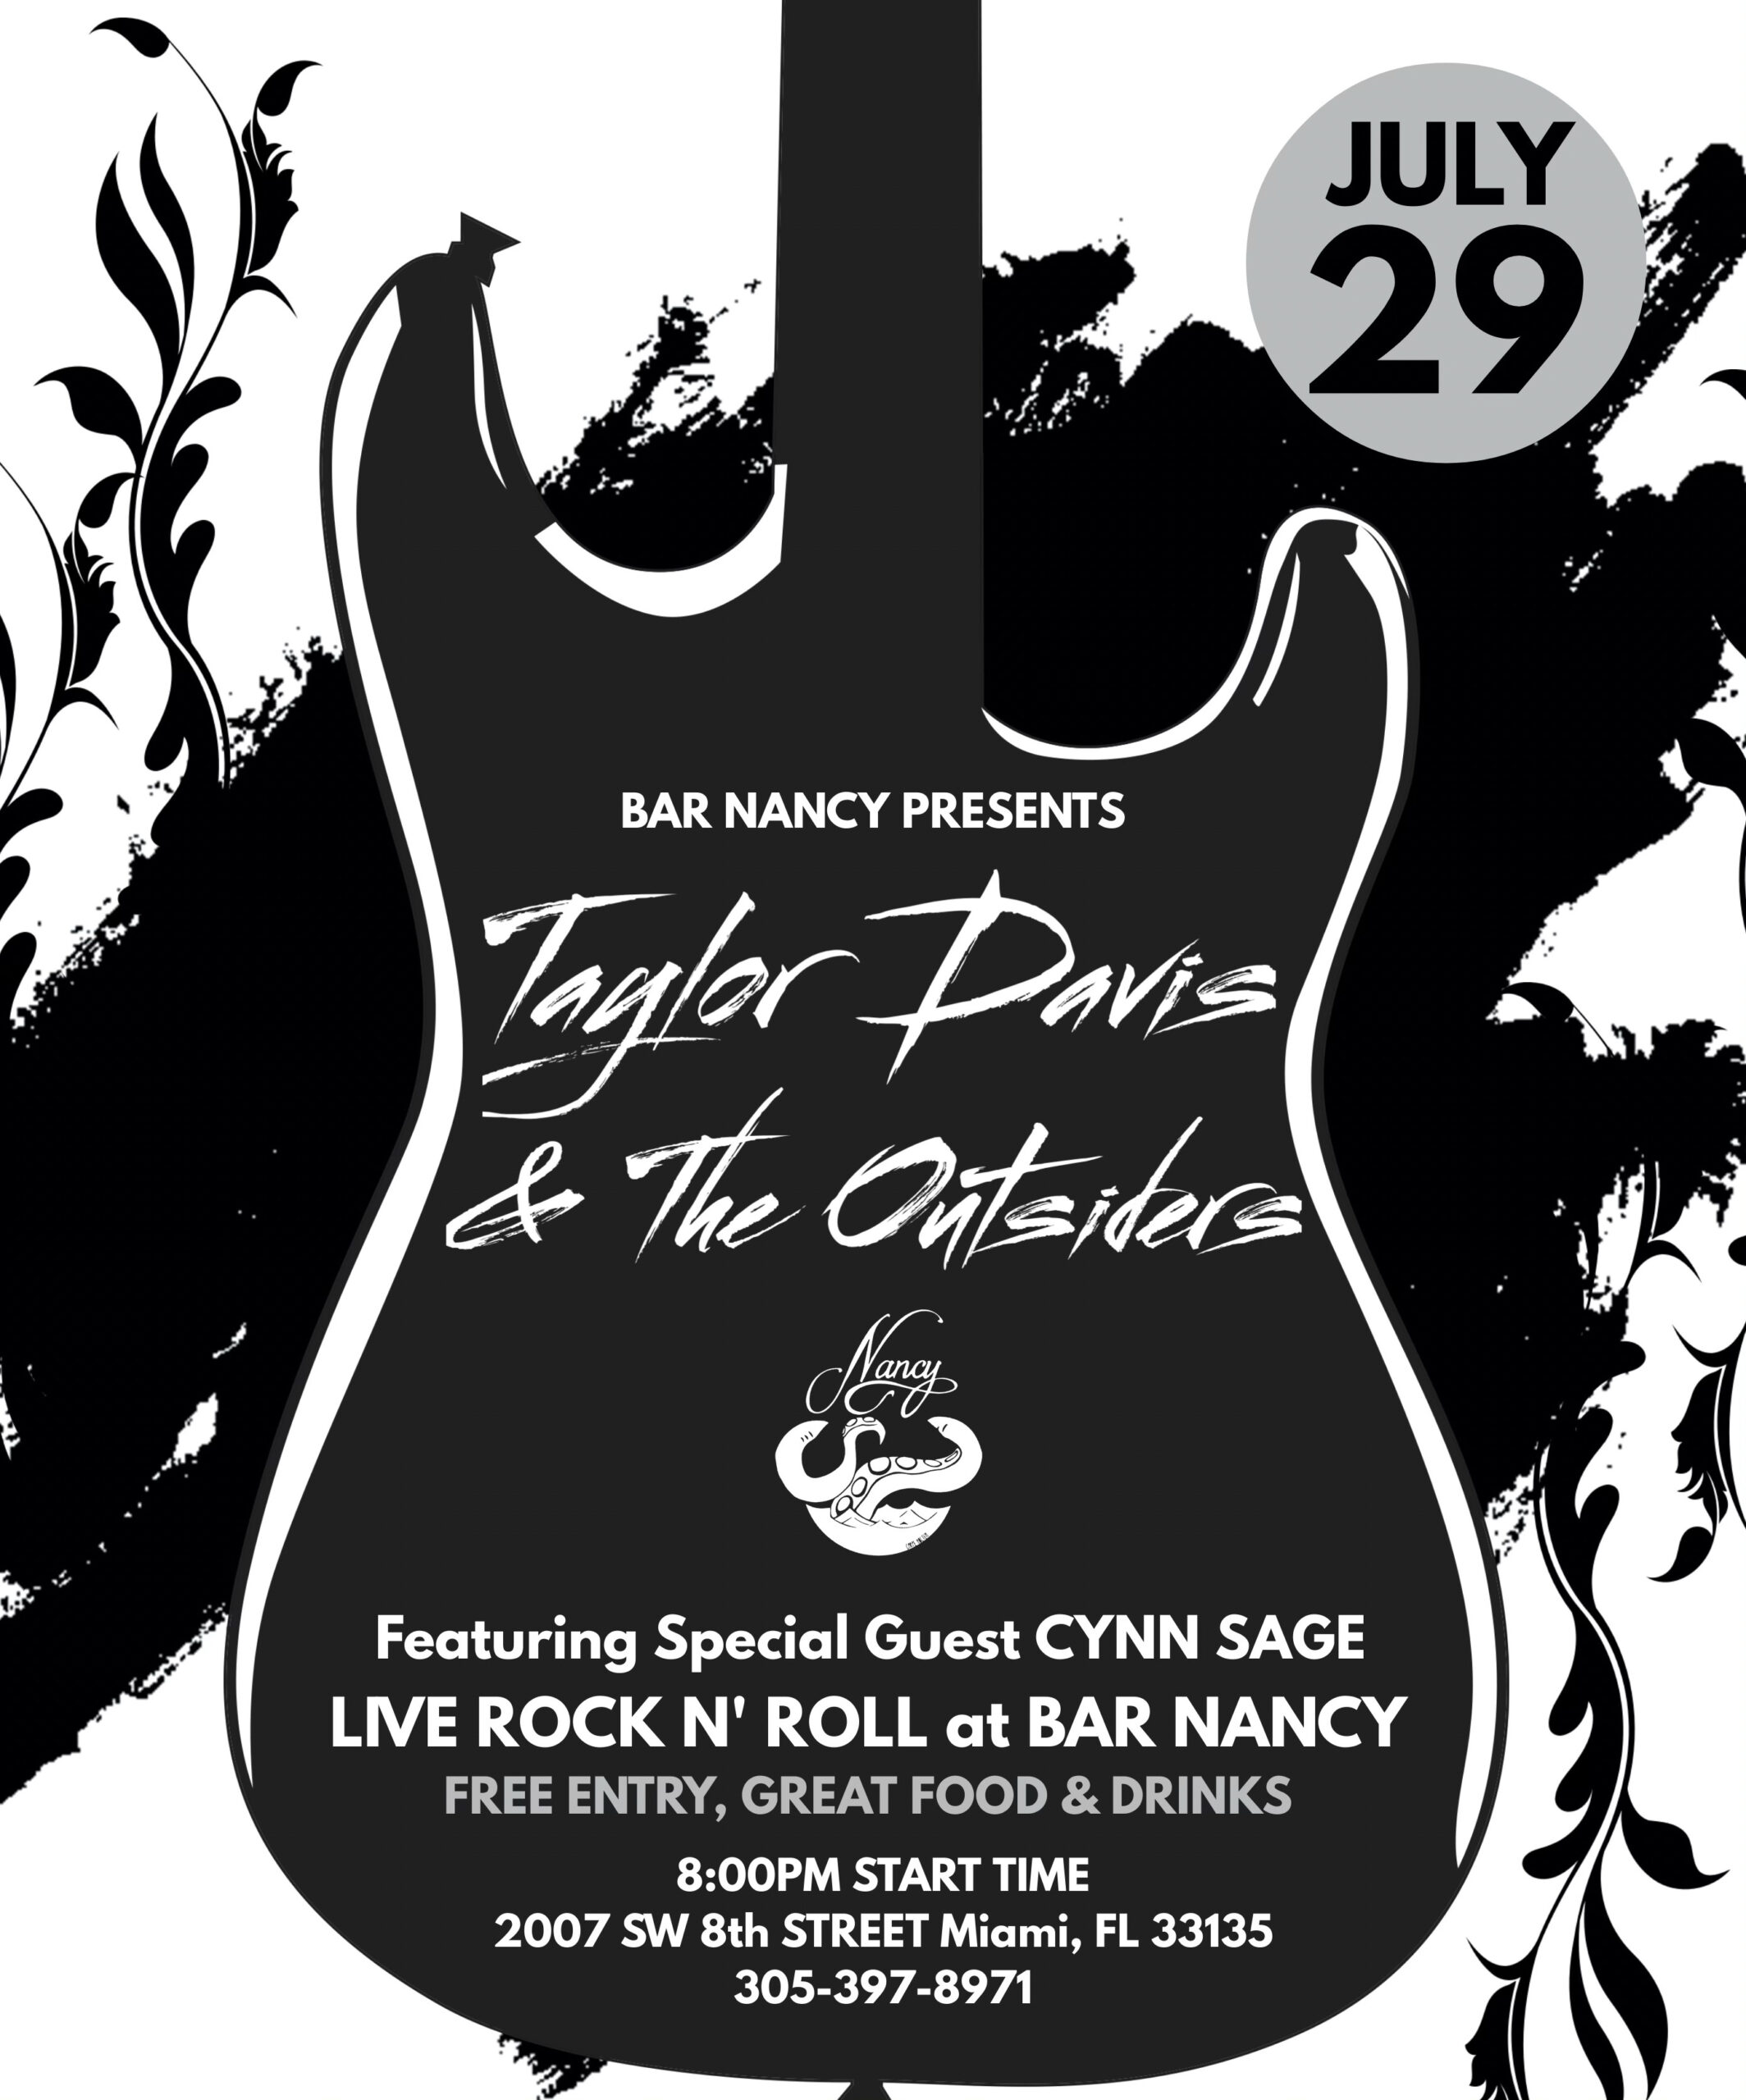 Taylor Davis and the Outsiders at Bar Nancy July 29